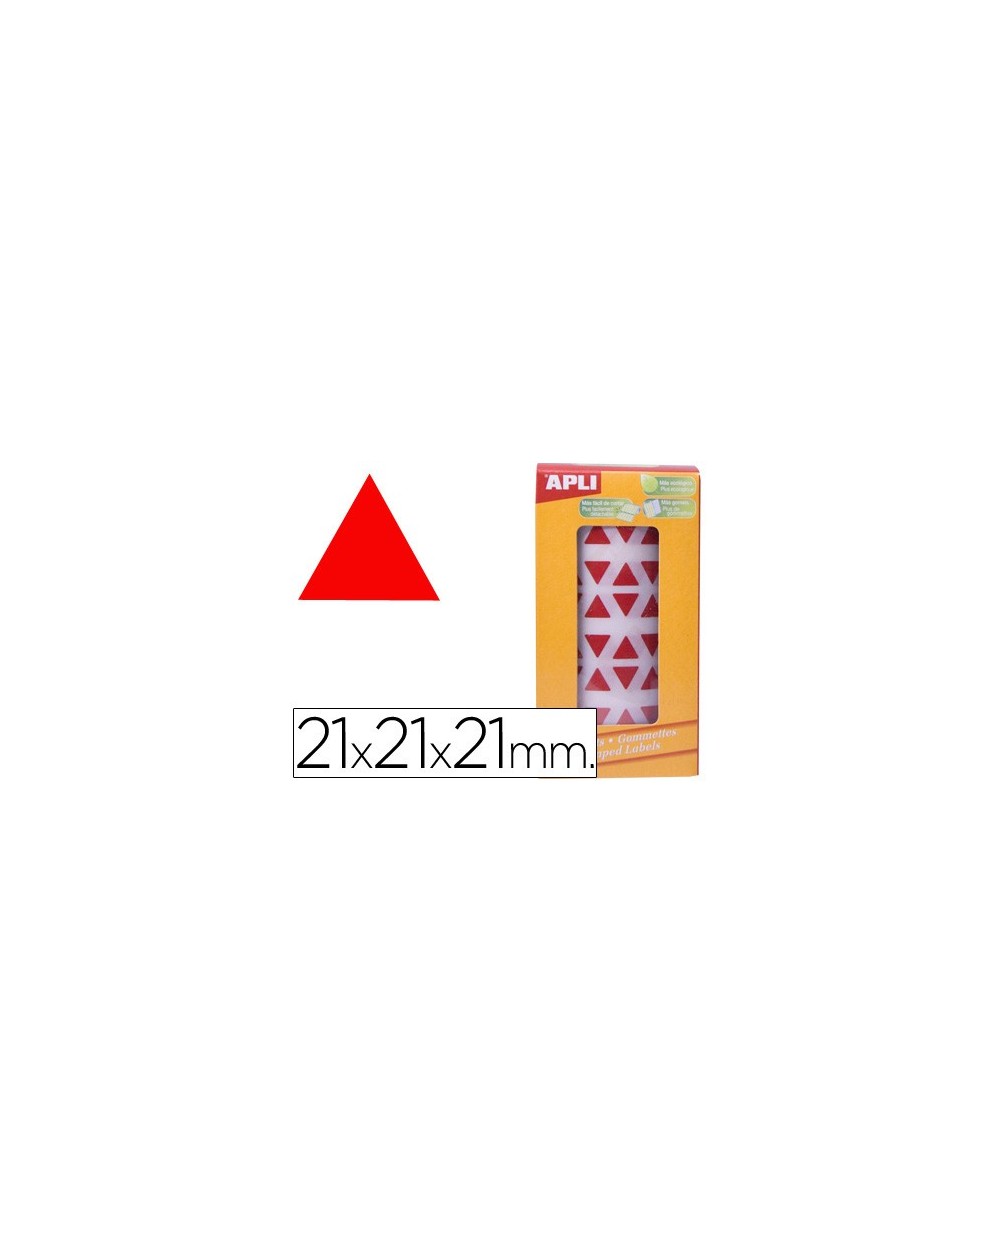 Gomets autoadhesivos triangulares 21x21x21 mm rojo en rollo